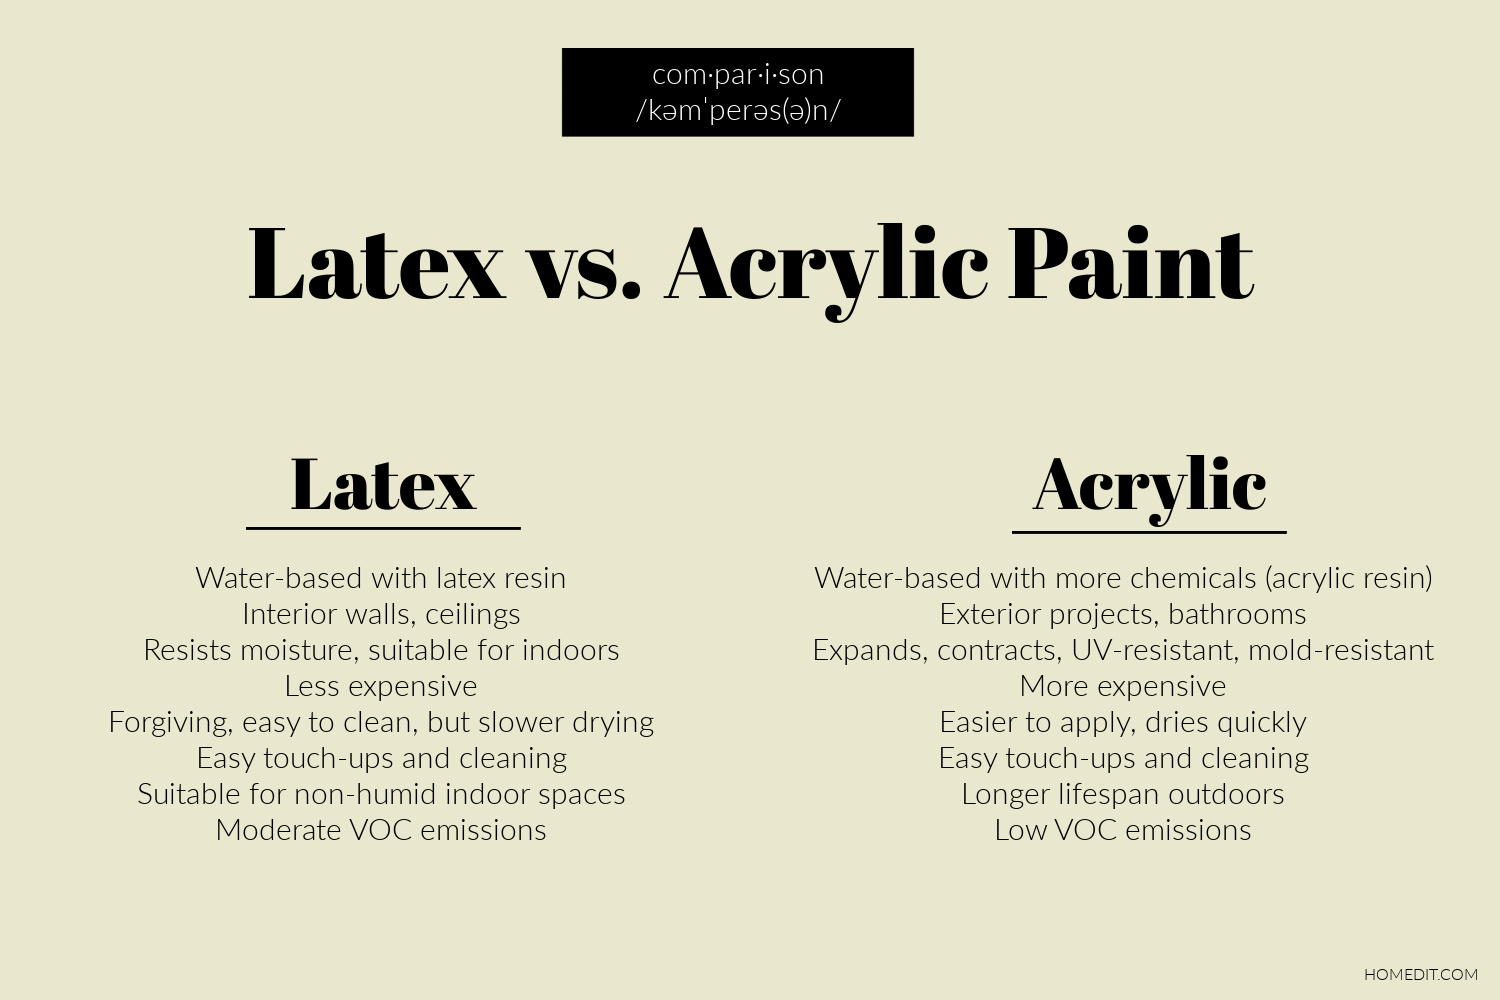 Latex vs acrylic paint comparasion table